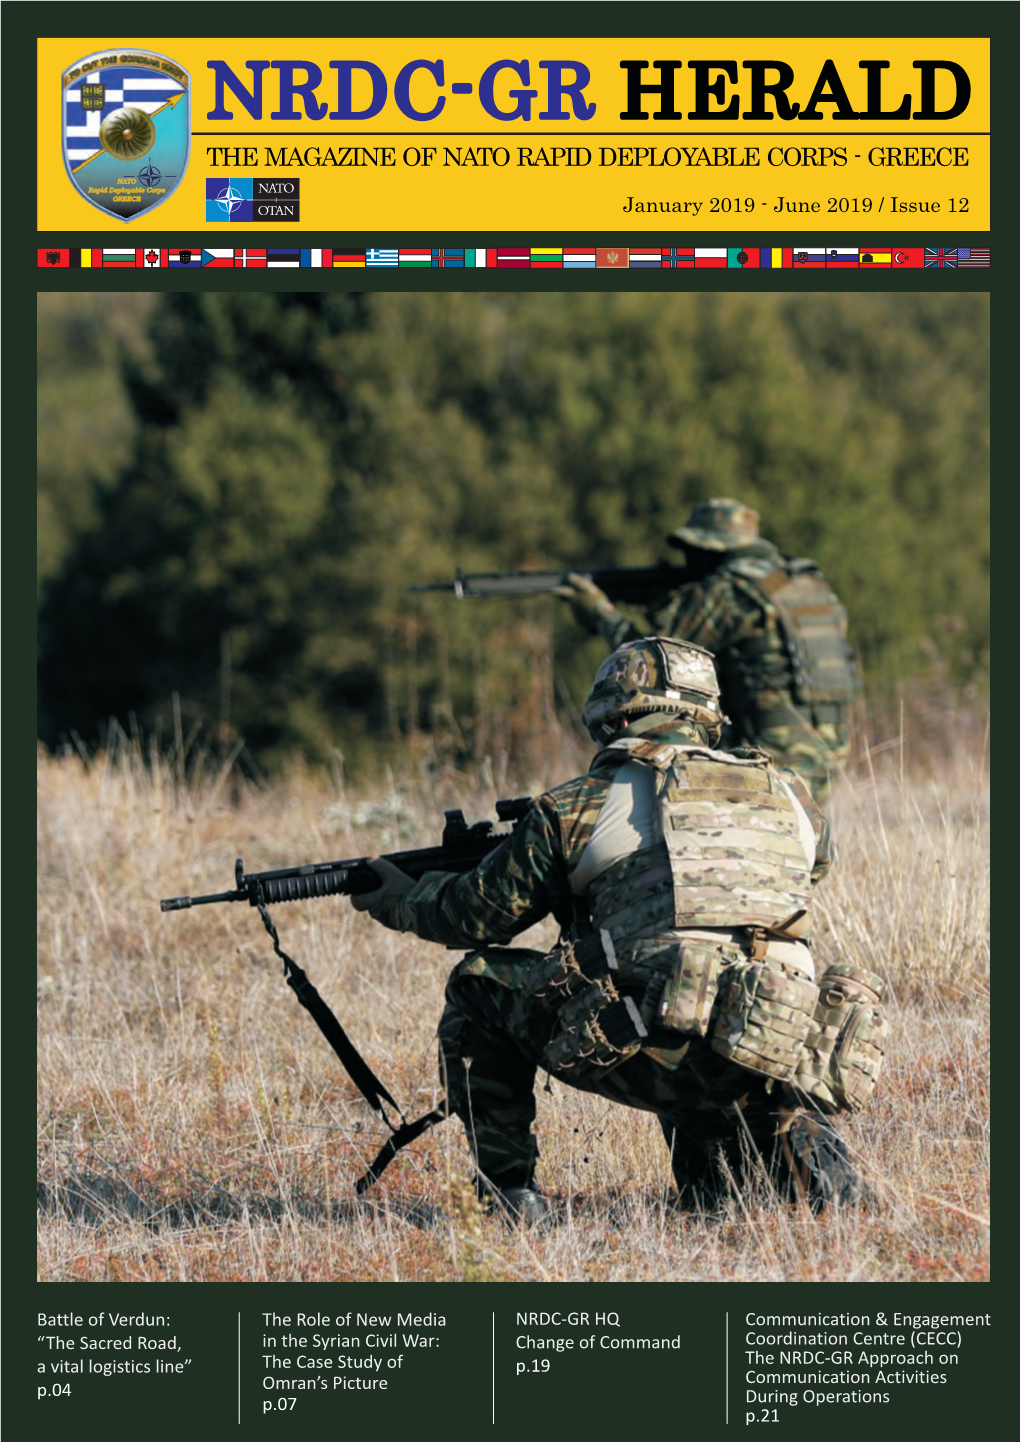 NRDC-GR HERALD the MAGAZINE of NATO RAPID DEPLOYABLE CORPS - GREECE NATO Rapid Deployable Corps GREECE January 2019 - June 2019 / Issue 12